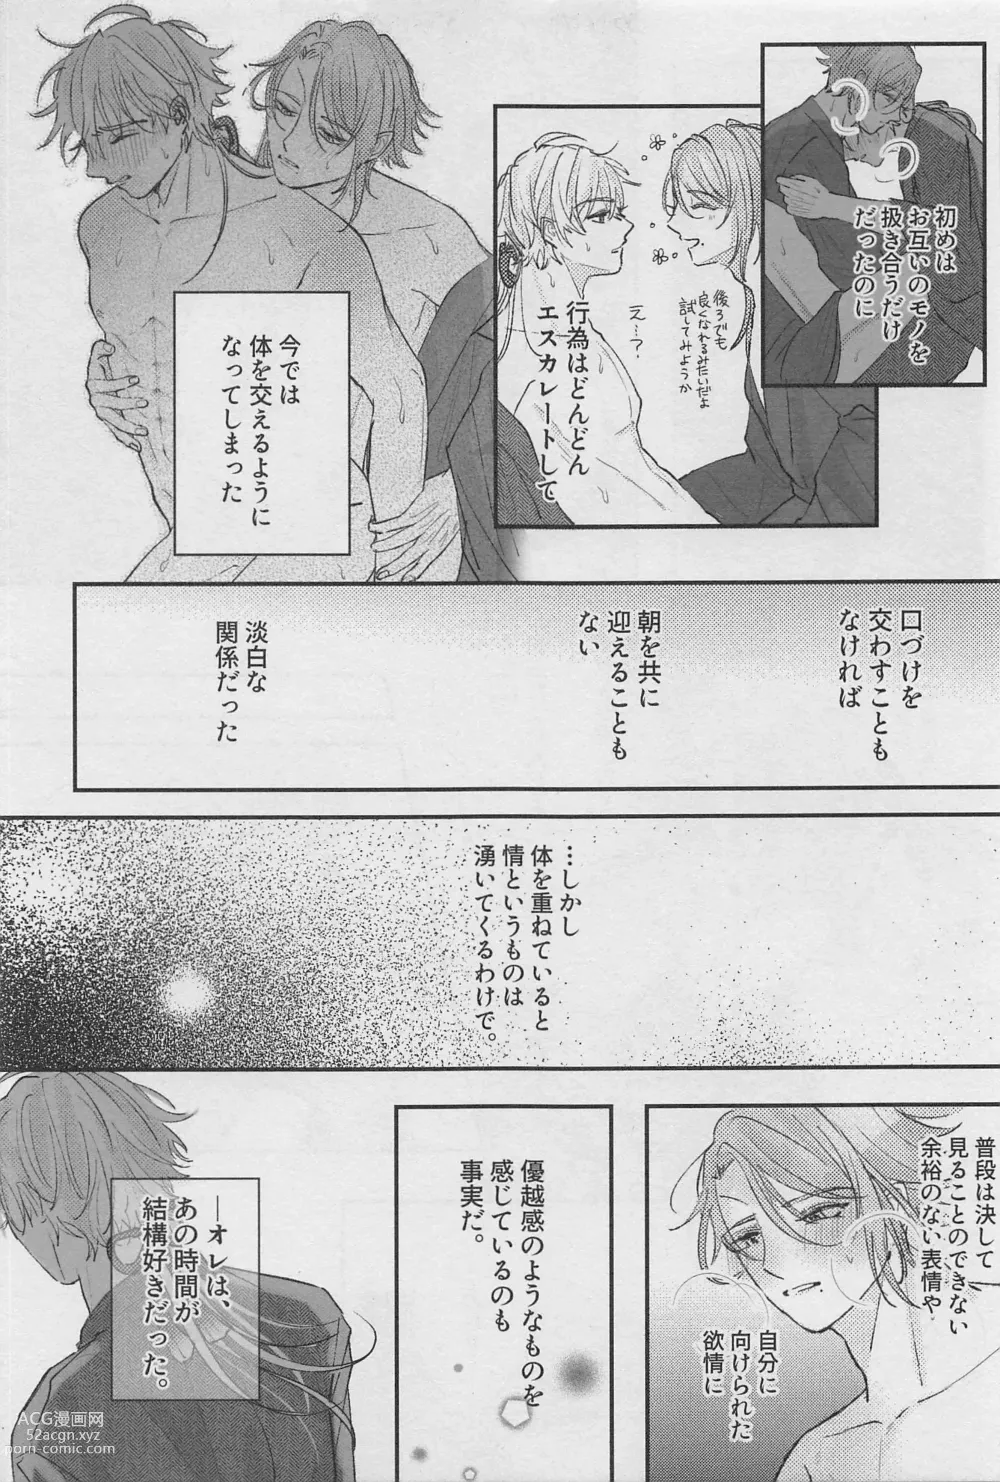 Page 6 of doujinshi Reimei o Tsugu